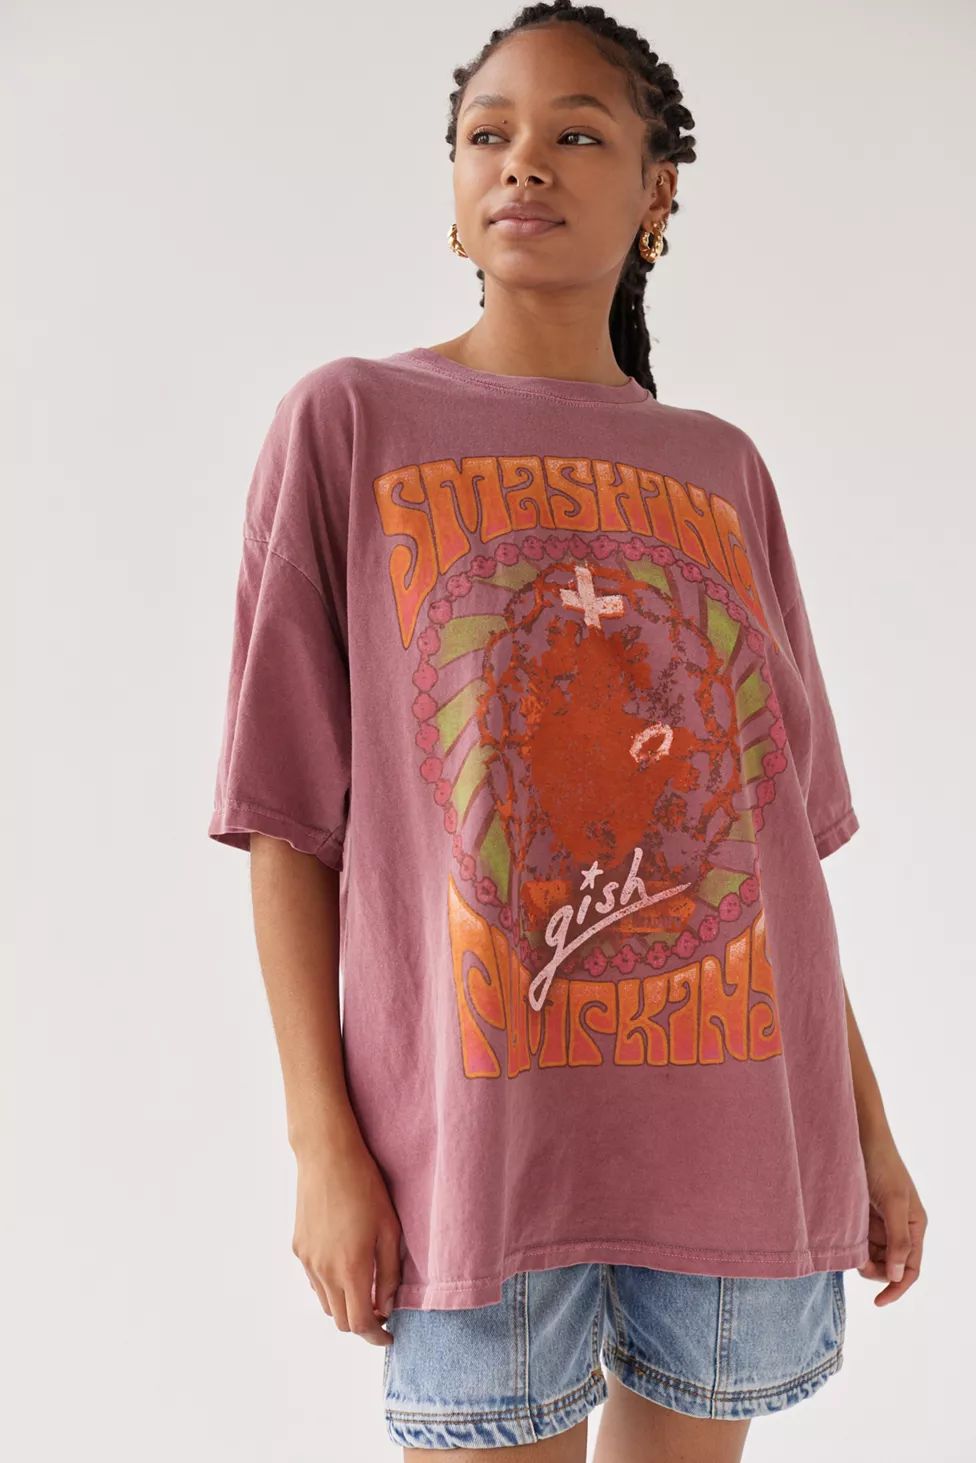 The Smashing Pumpkins Gish T-Shirt Dress | Urban Outfitters (US and RoW)